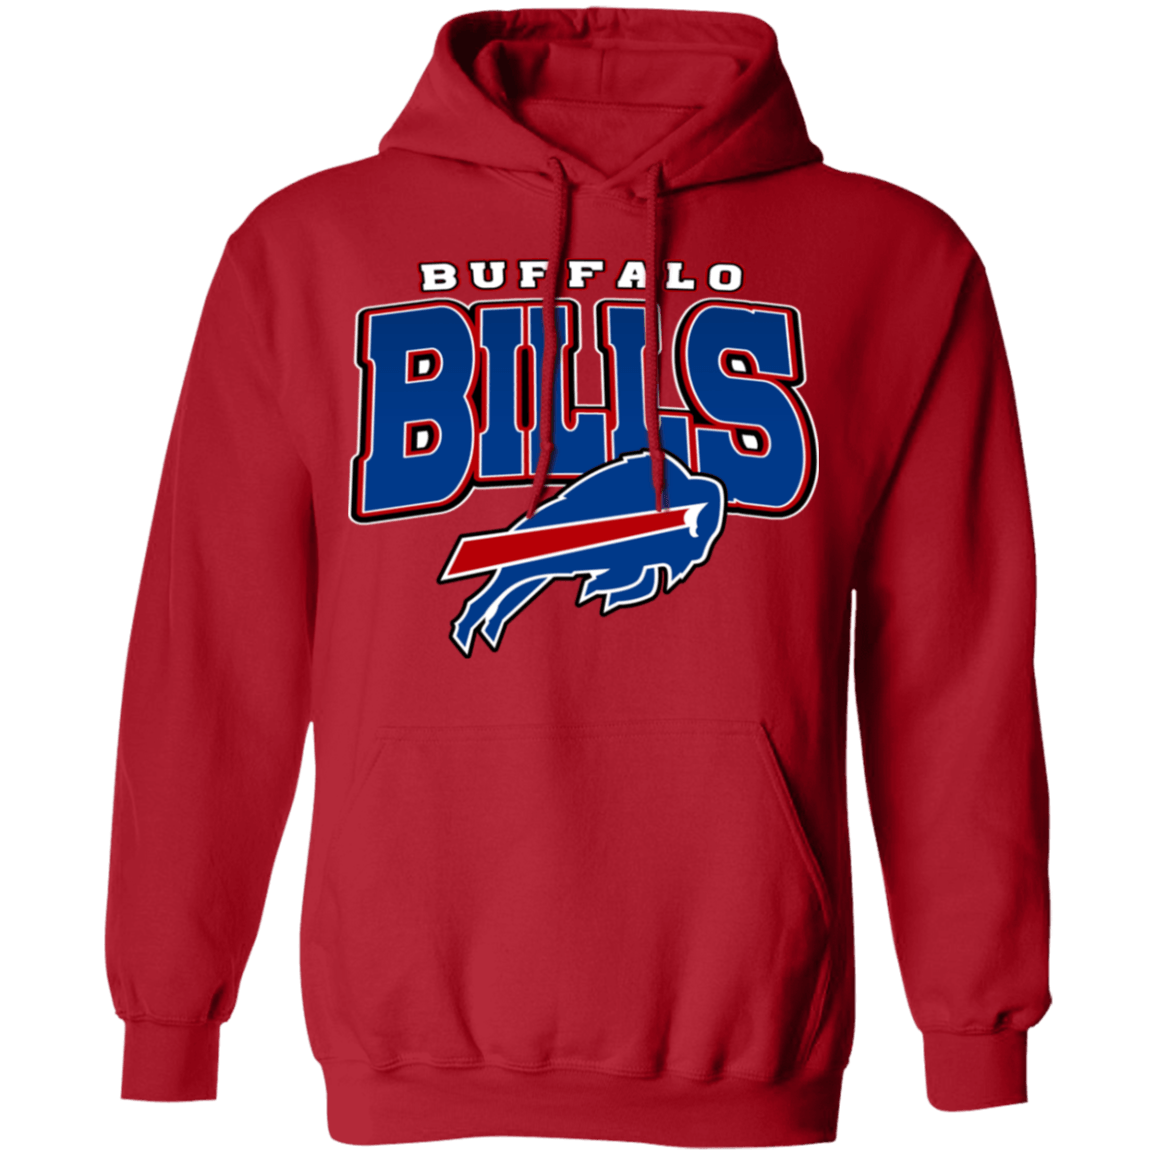 nfl shop bills hoodie